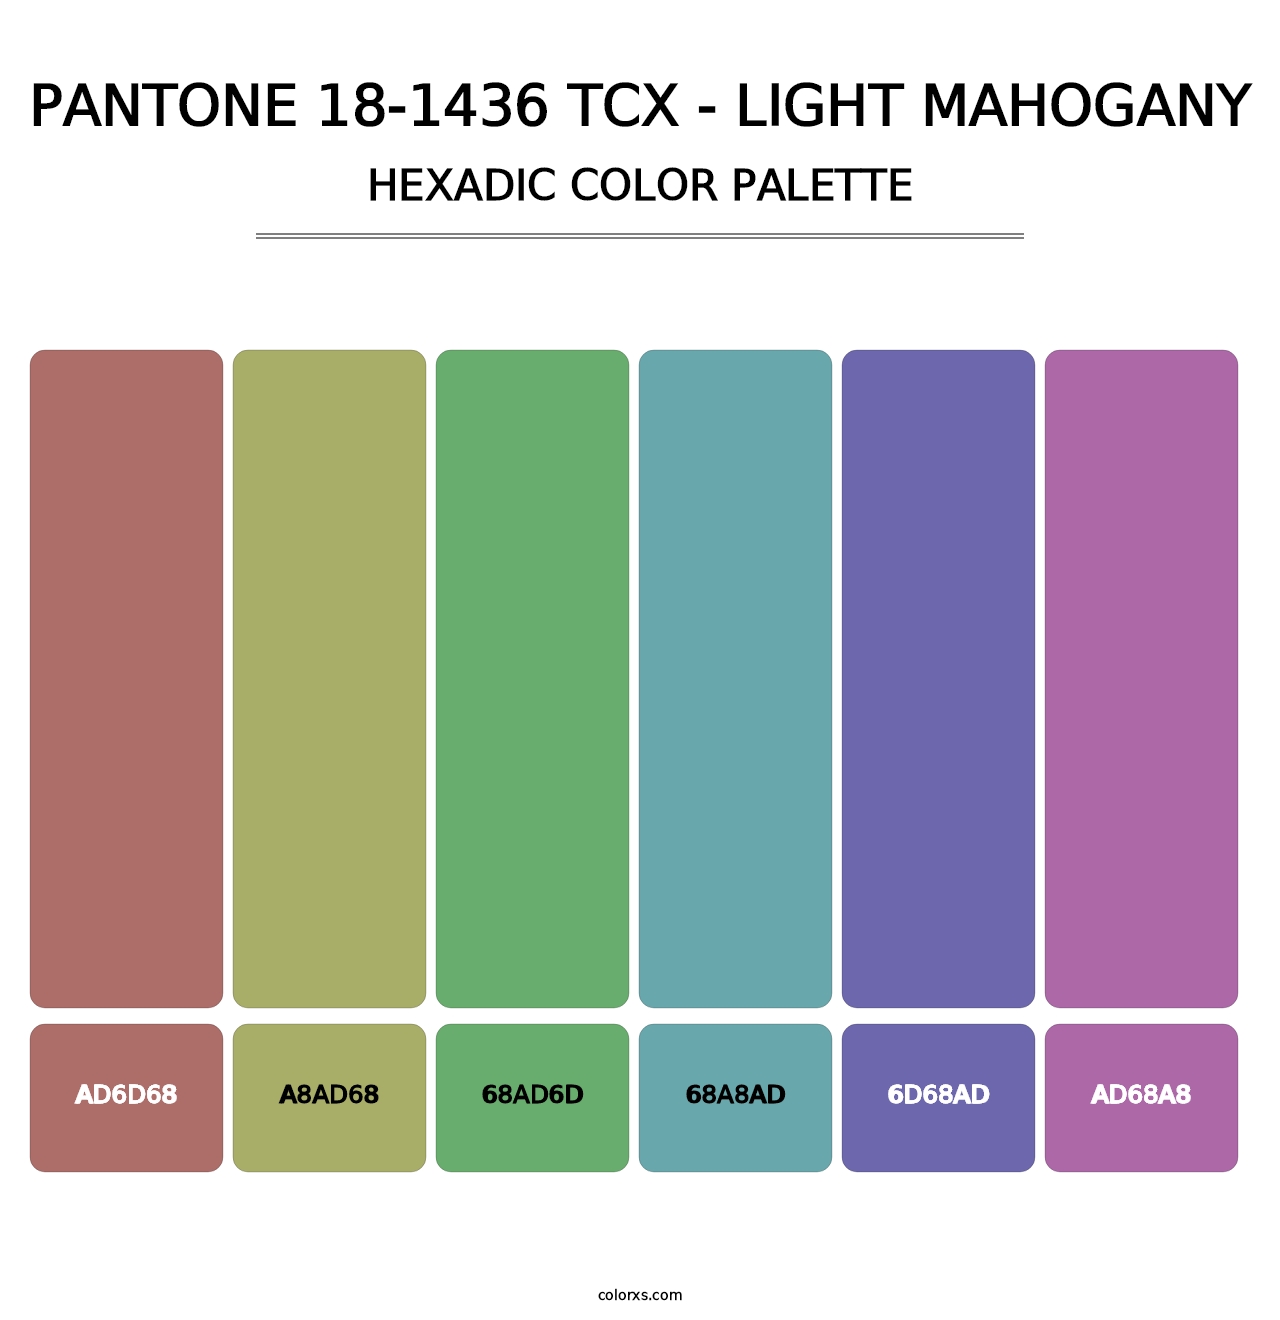 PANTONE 18-1436 TCX - Light Mahogany - Hexadic Color Palette